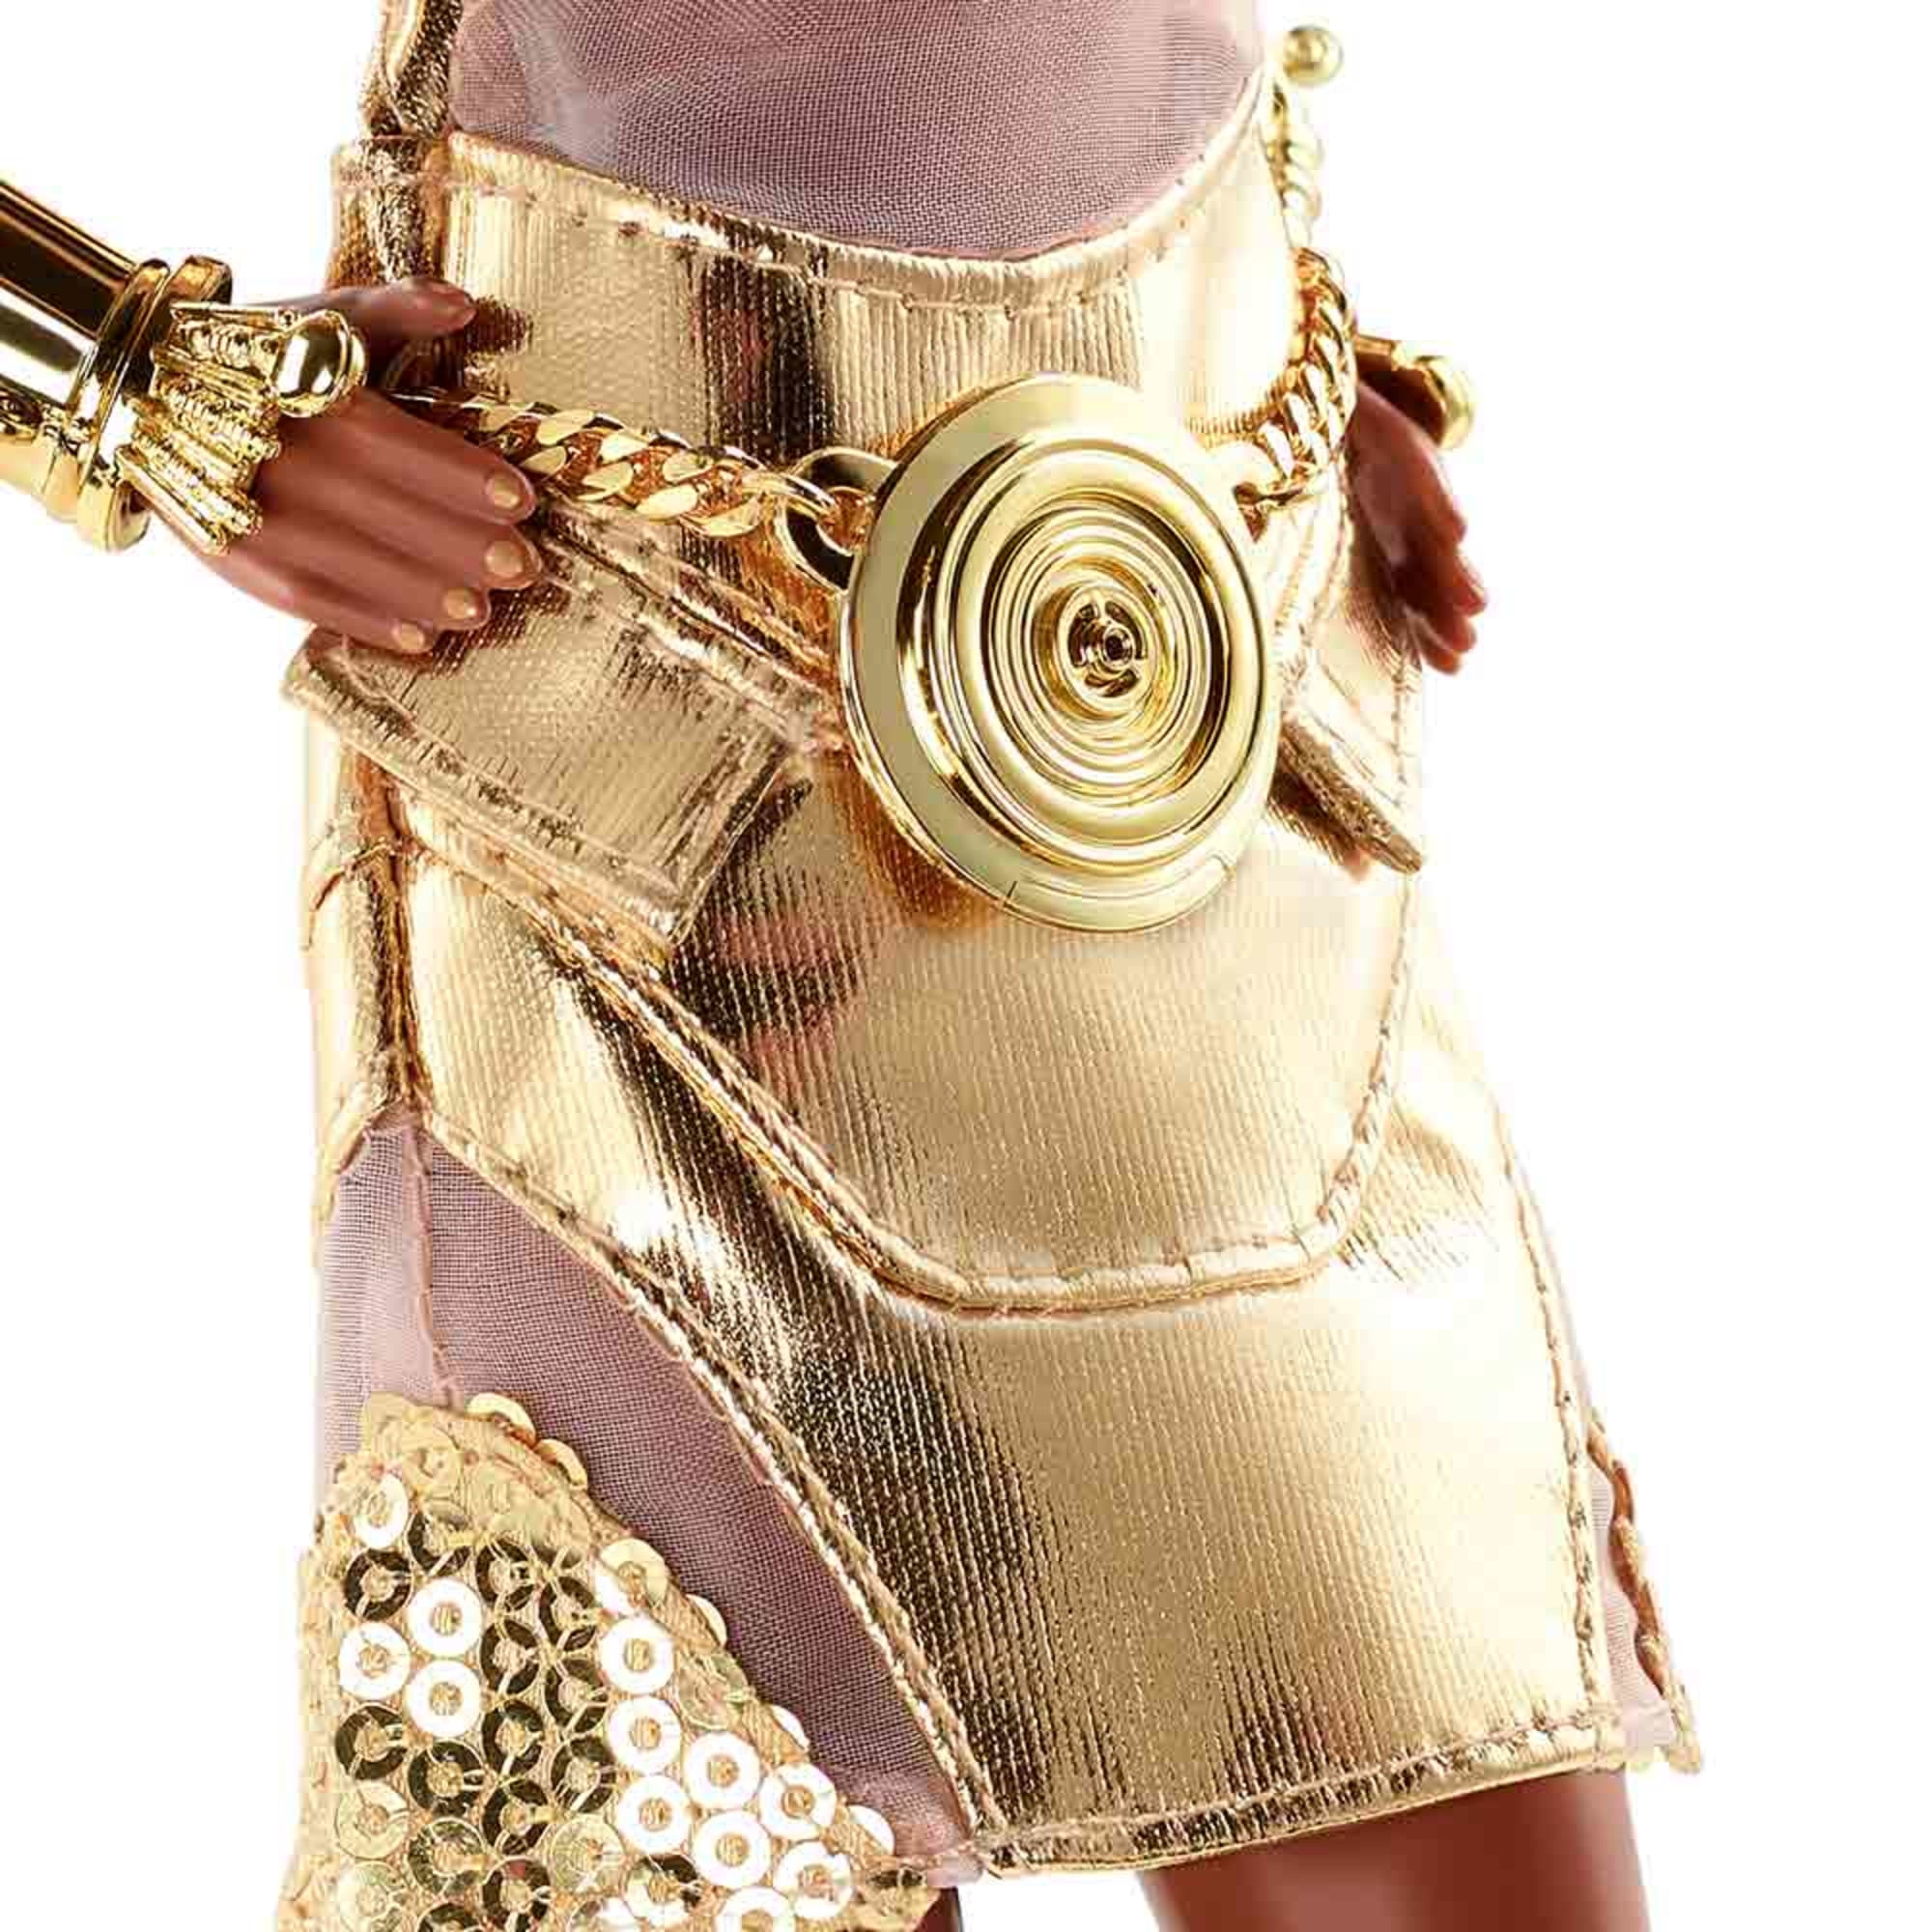 Star Wars C-3PO x Barbie Doll